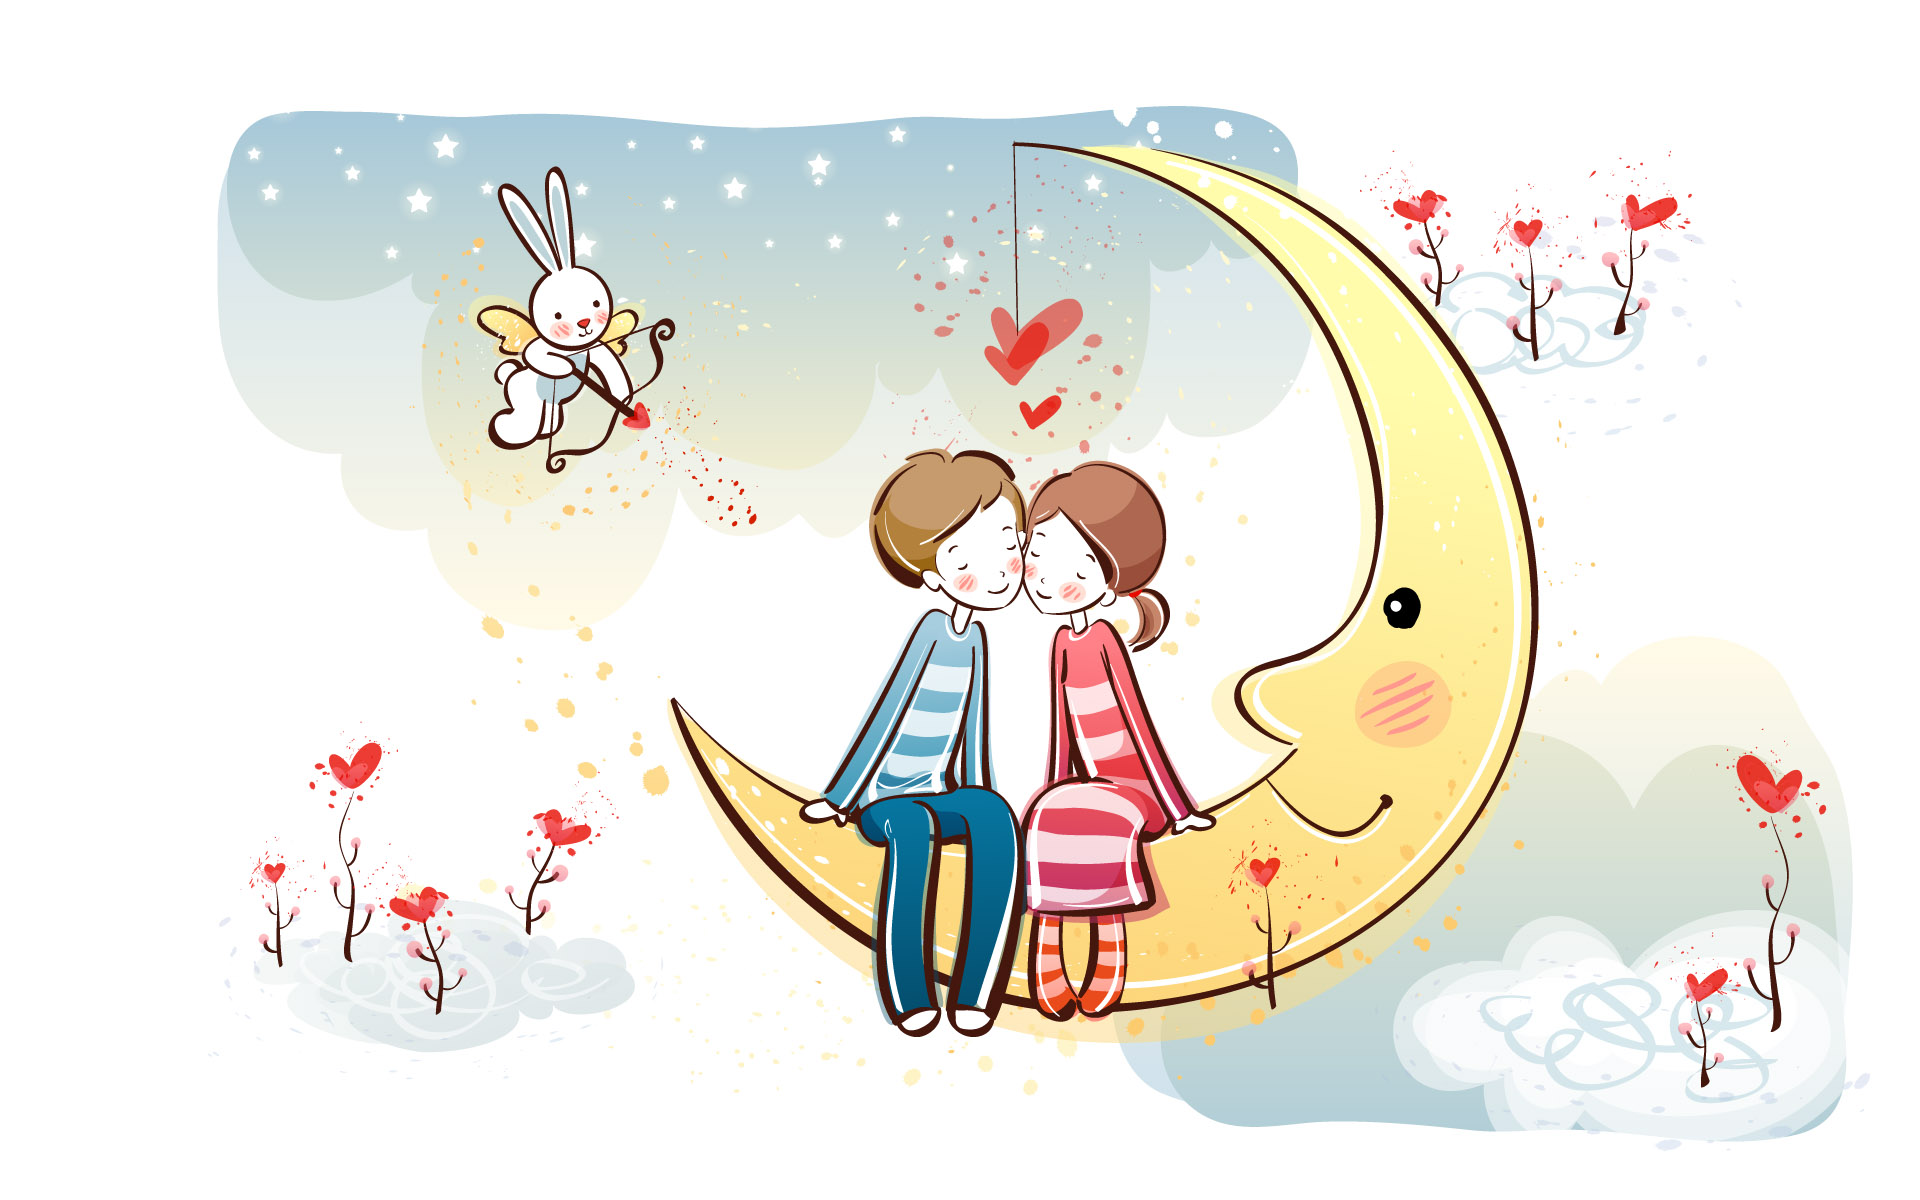 Free Love Couple Cartoon Image, Download Free Love Couple Cartoon Image